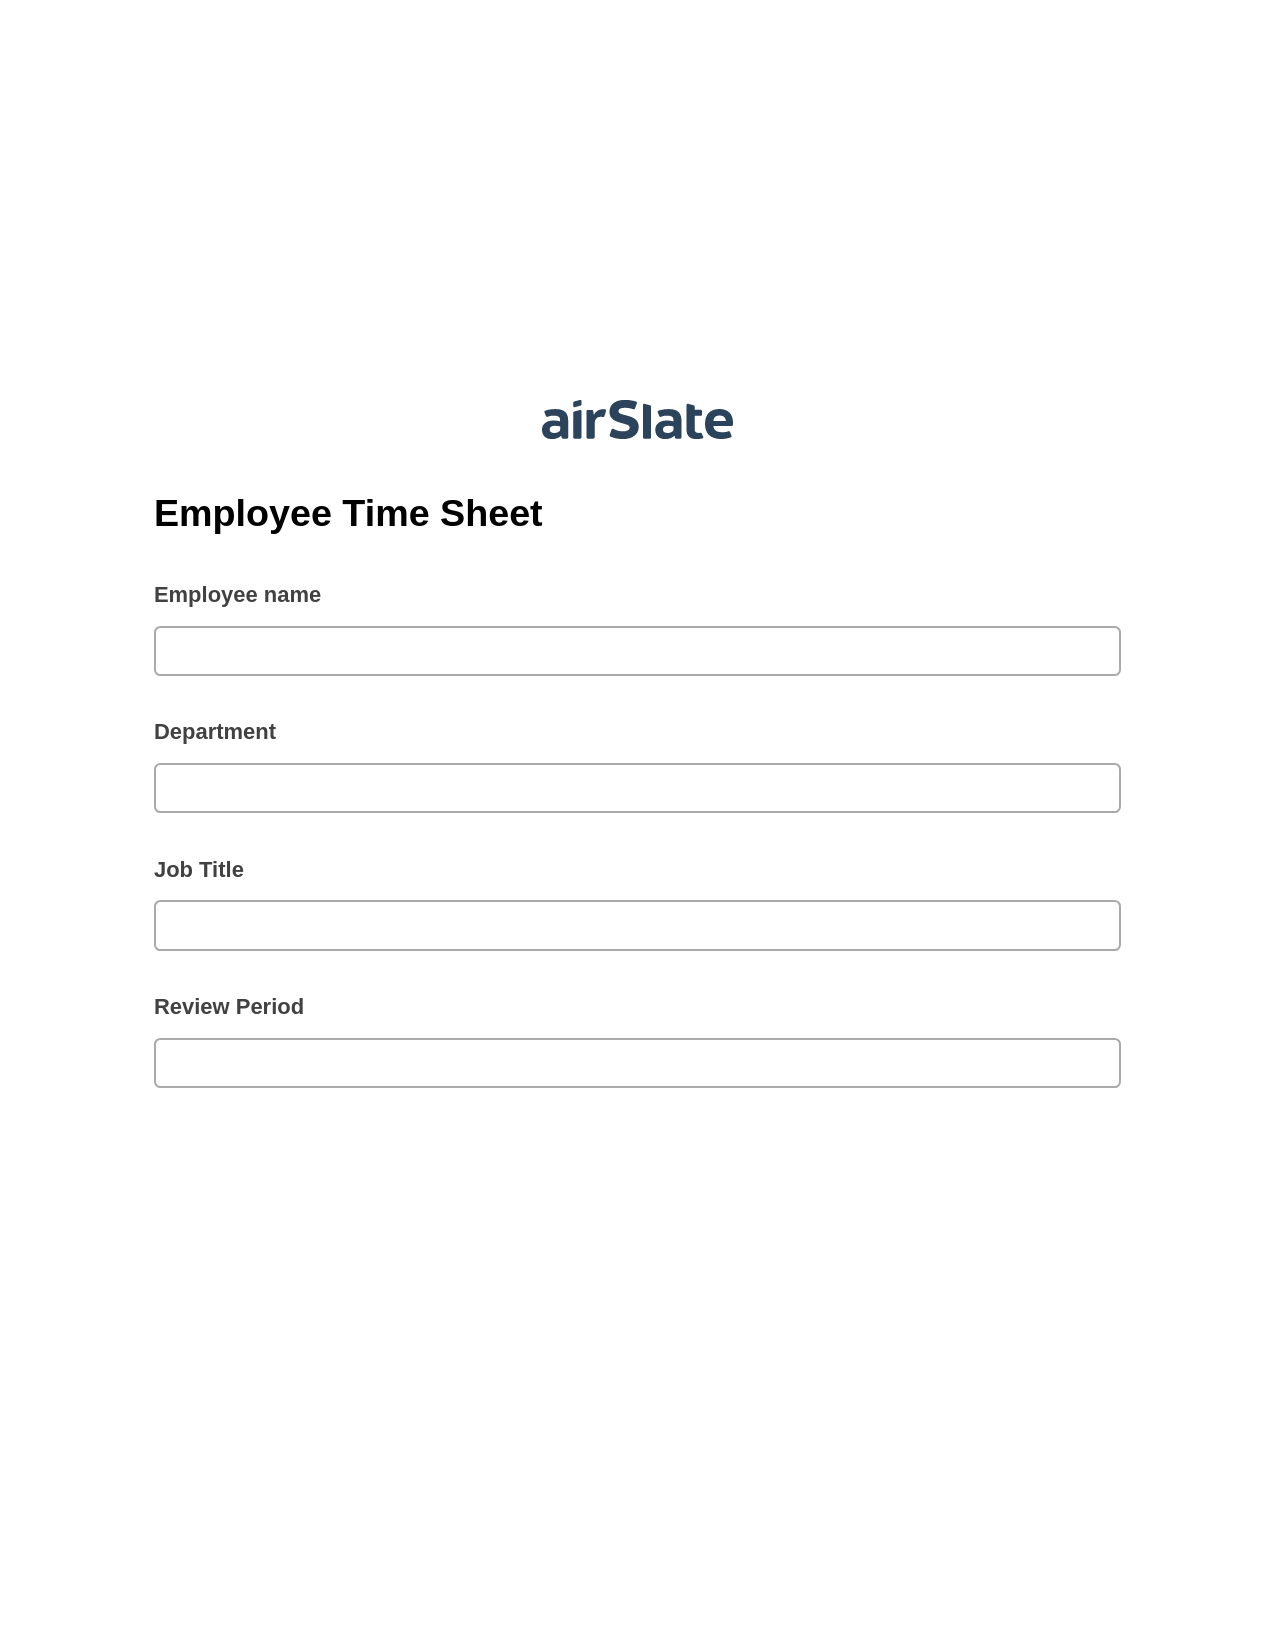 Multirole Employee Time Sheet Pre-fill from Salesforce Records Bot, Update Audit Trail Bot, Webhook Postfinish Bot